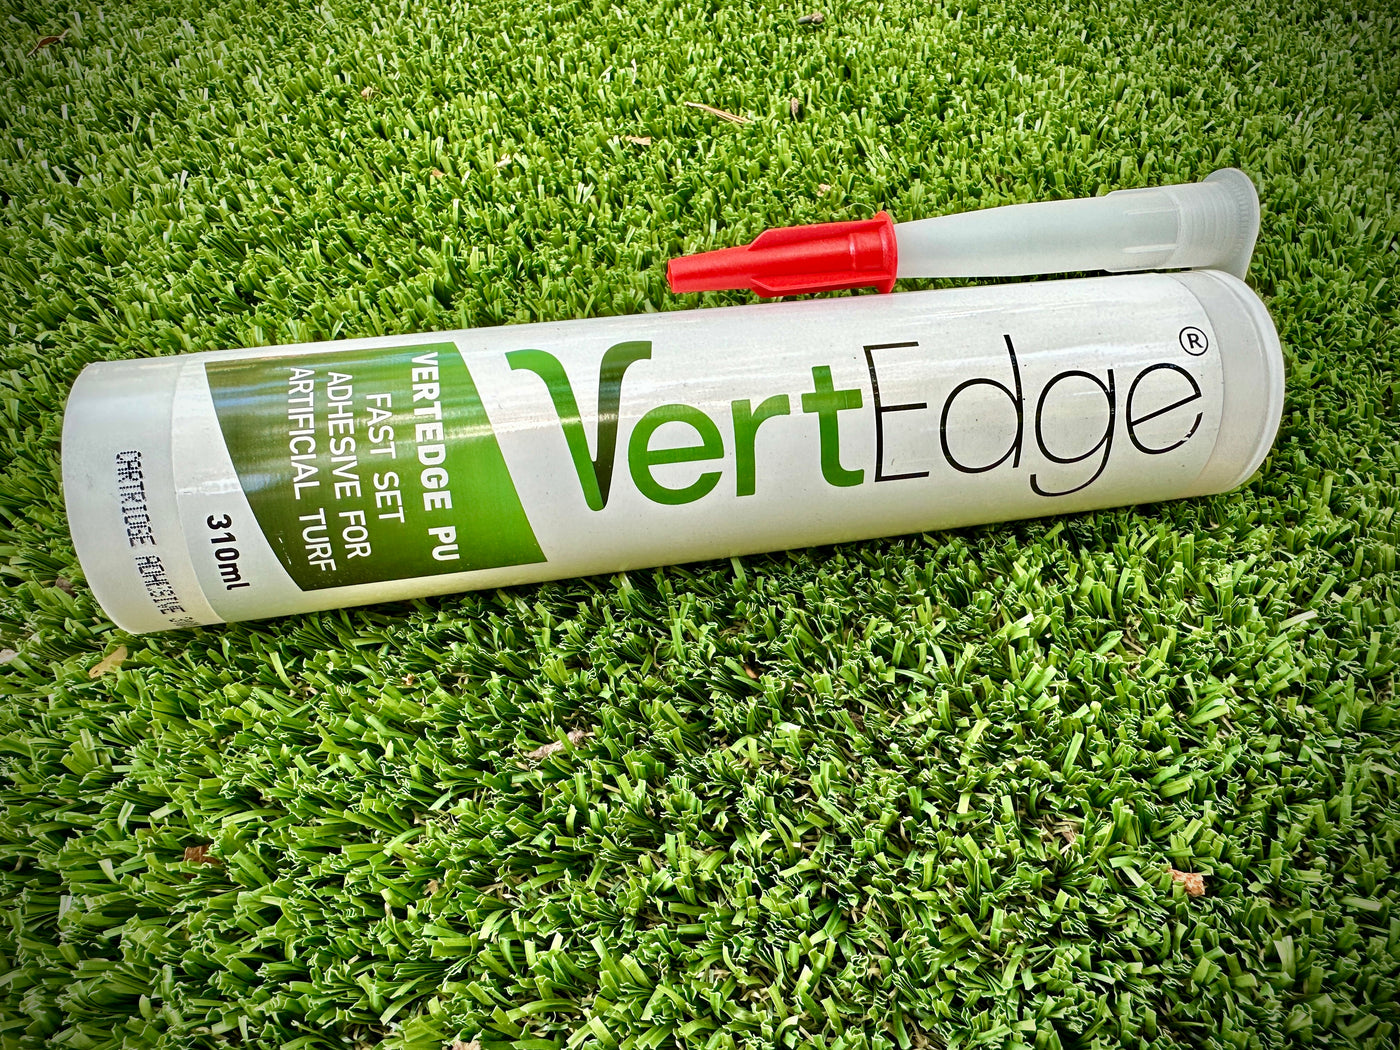 VertEdge Adhesive